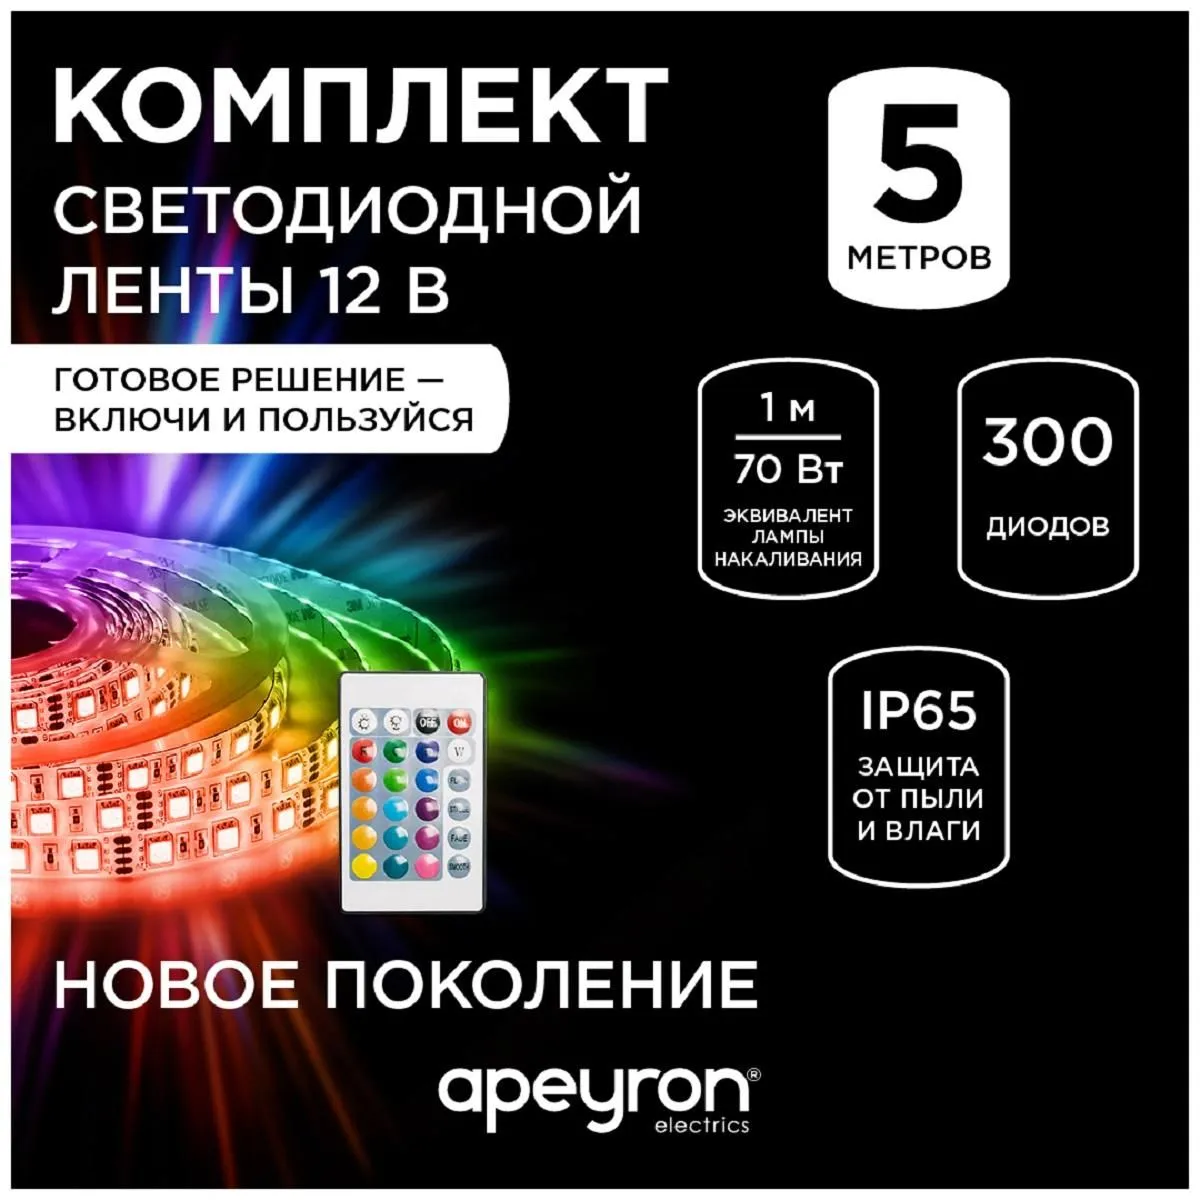 Комплект светодиодной ленты с аксессуарами smd5050 60д/м 12В IP65 5м RGB Apeyron - Фото 9